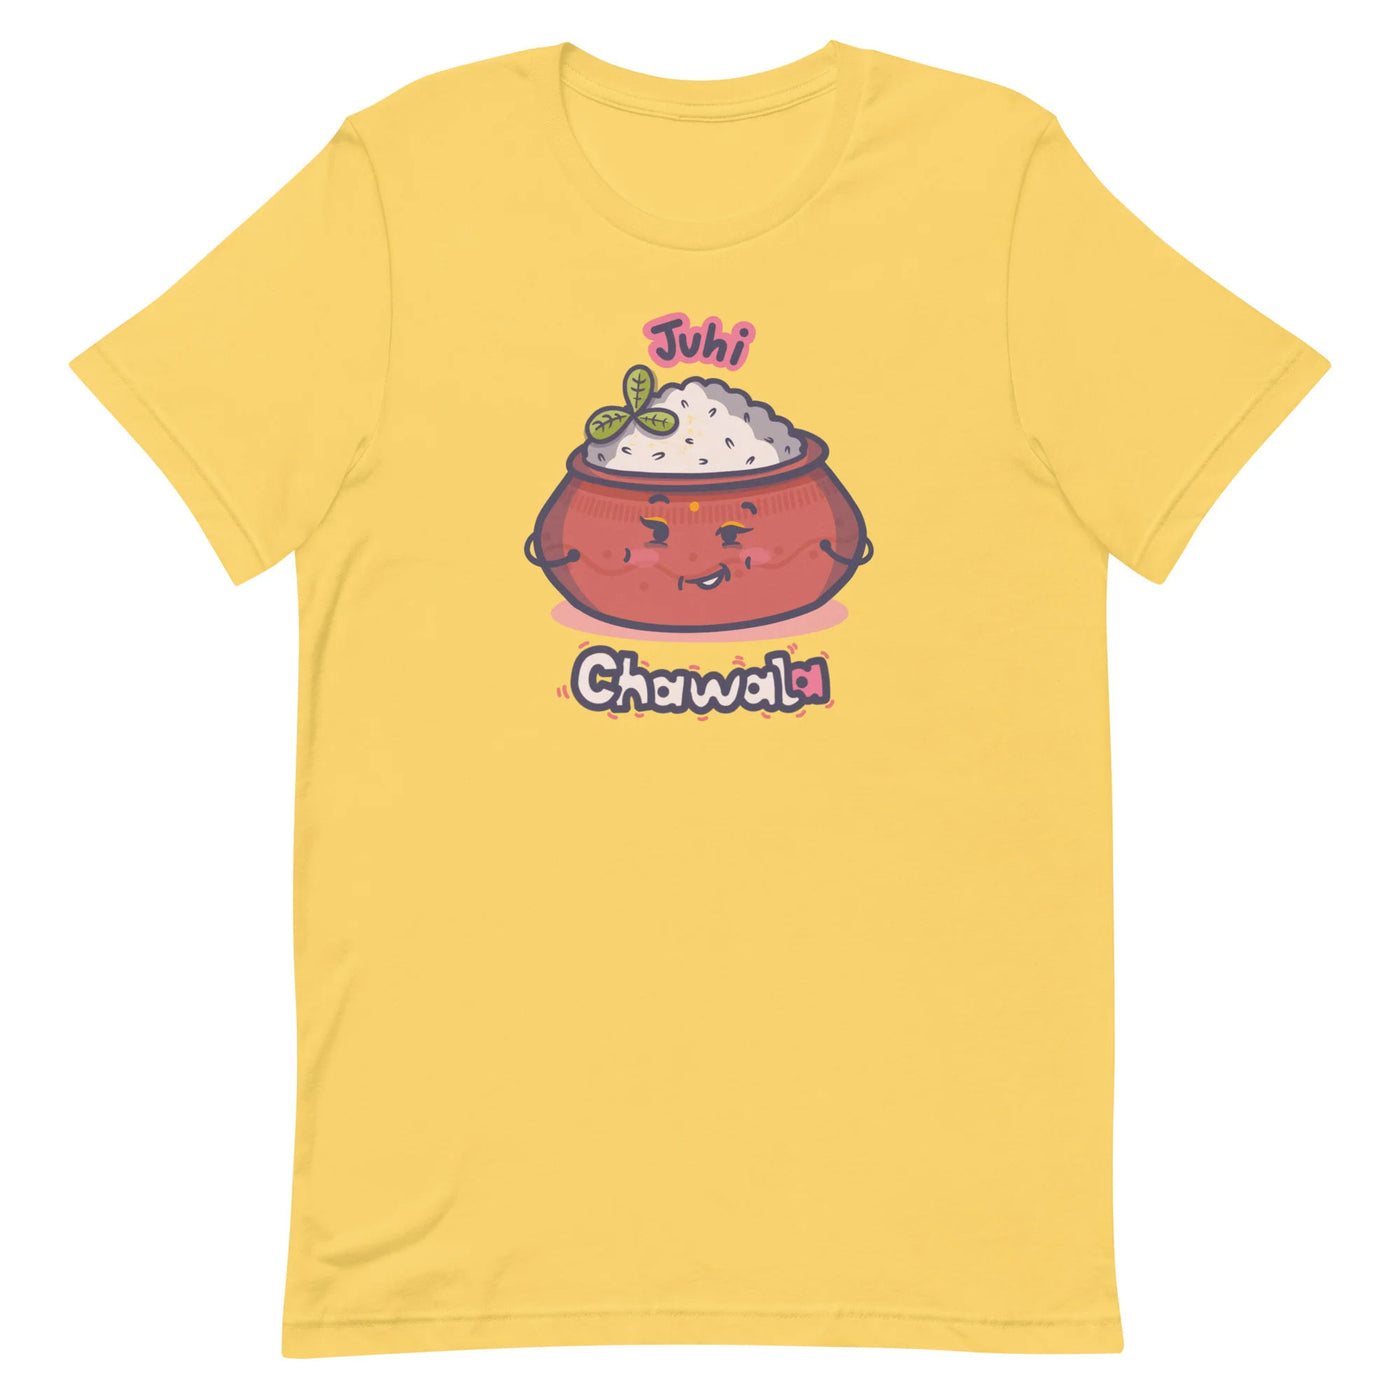 Juhi Chawala Adult T-shirt by The Cute Pista 